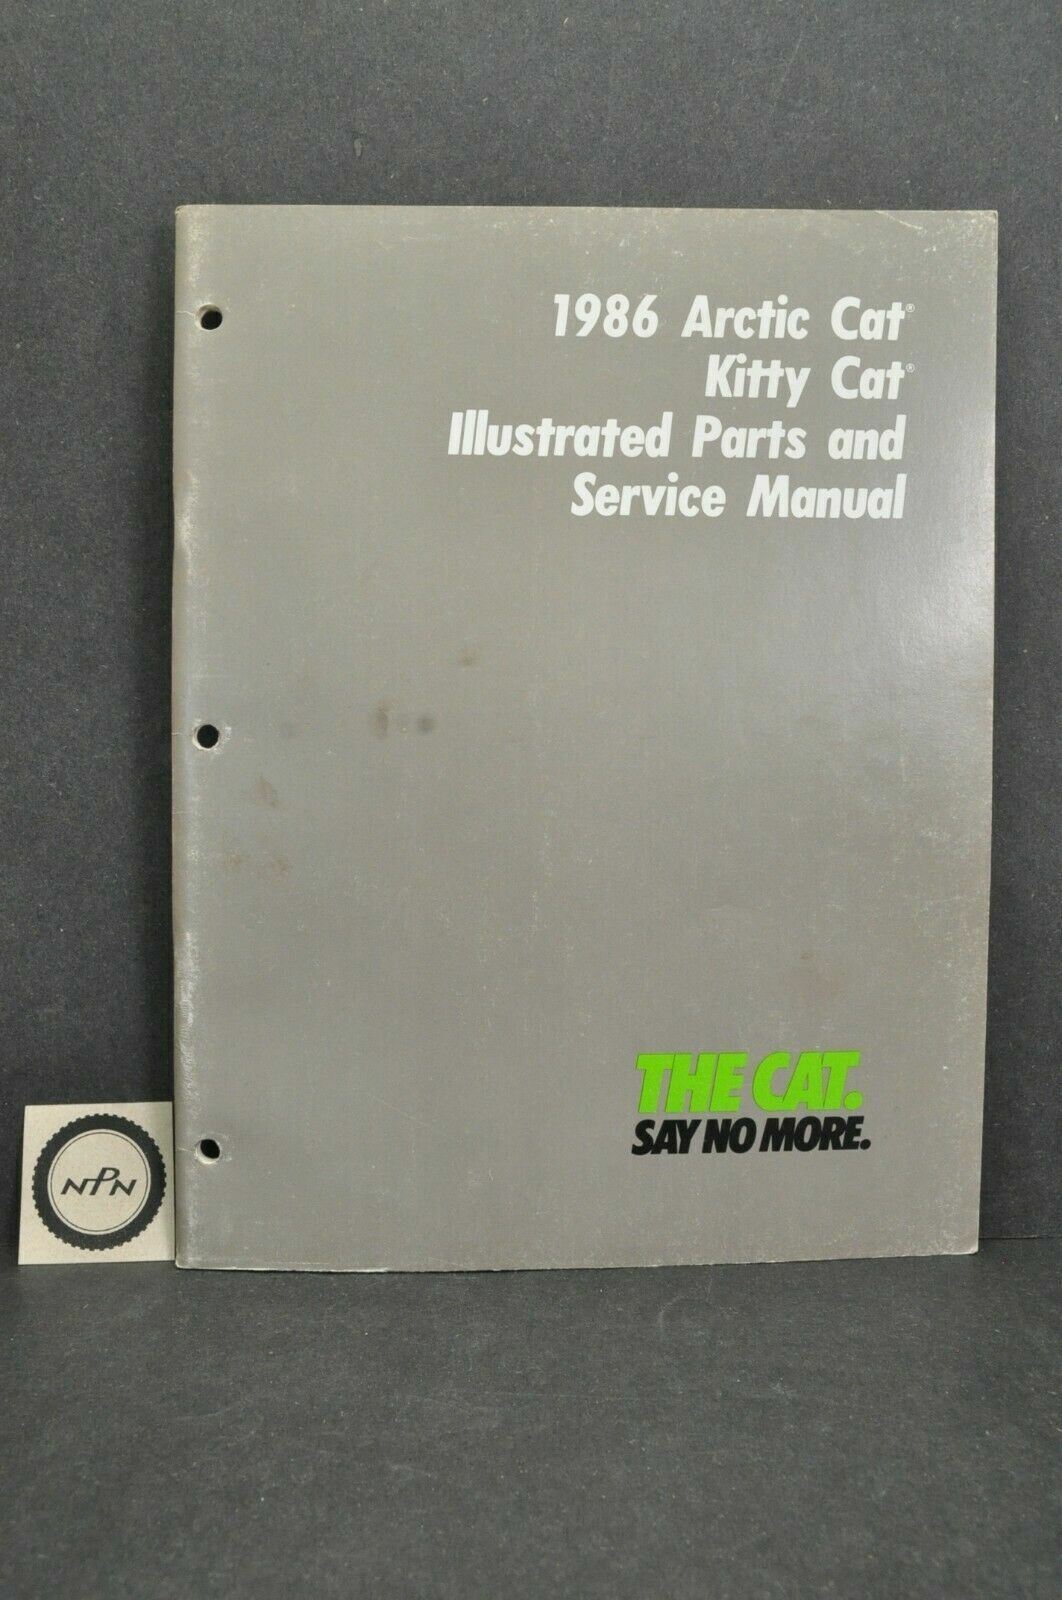 Arctic Cat Service Manual Kitty Cat 1986 Snowmobile Repair Maintenance Vtg OEM